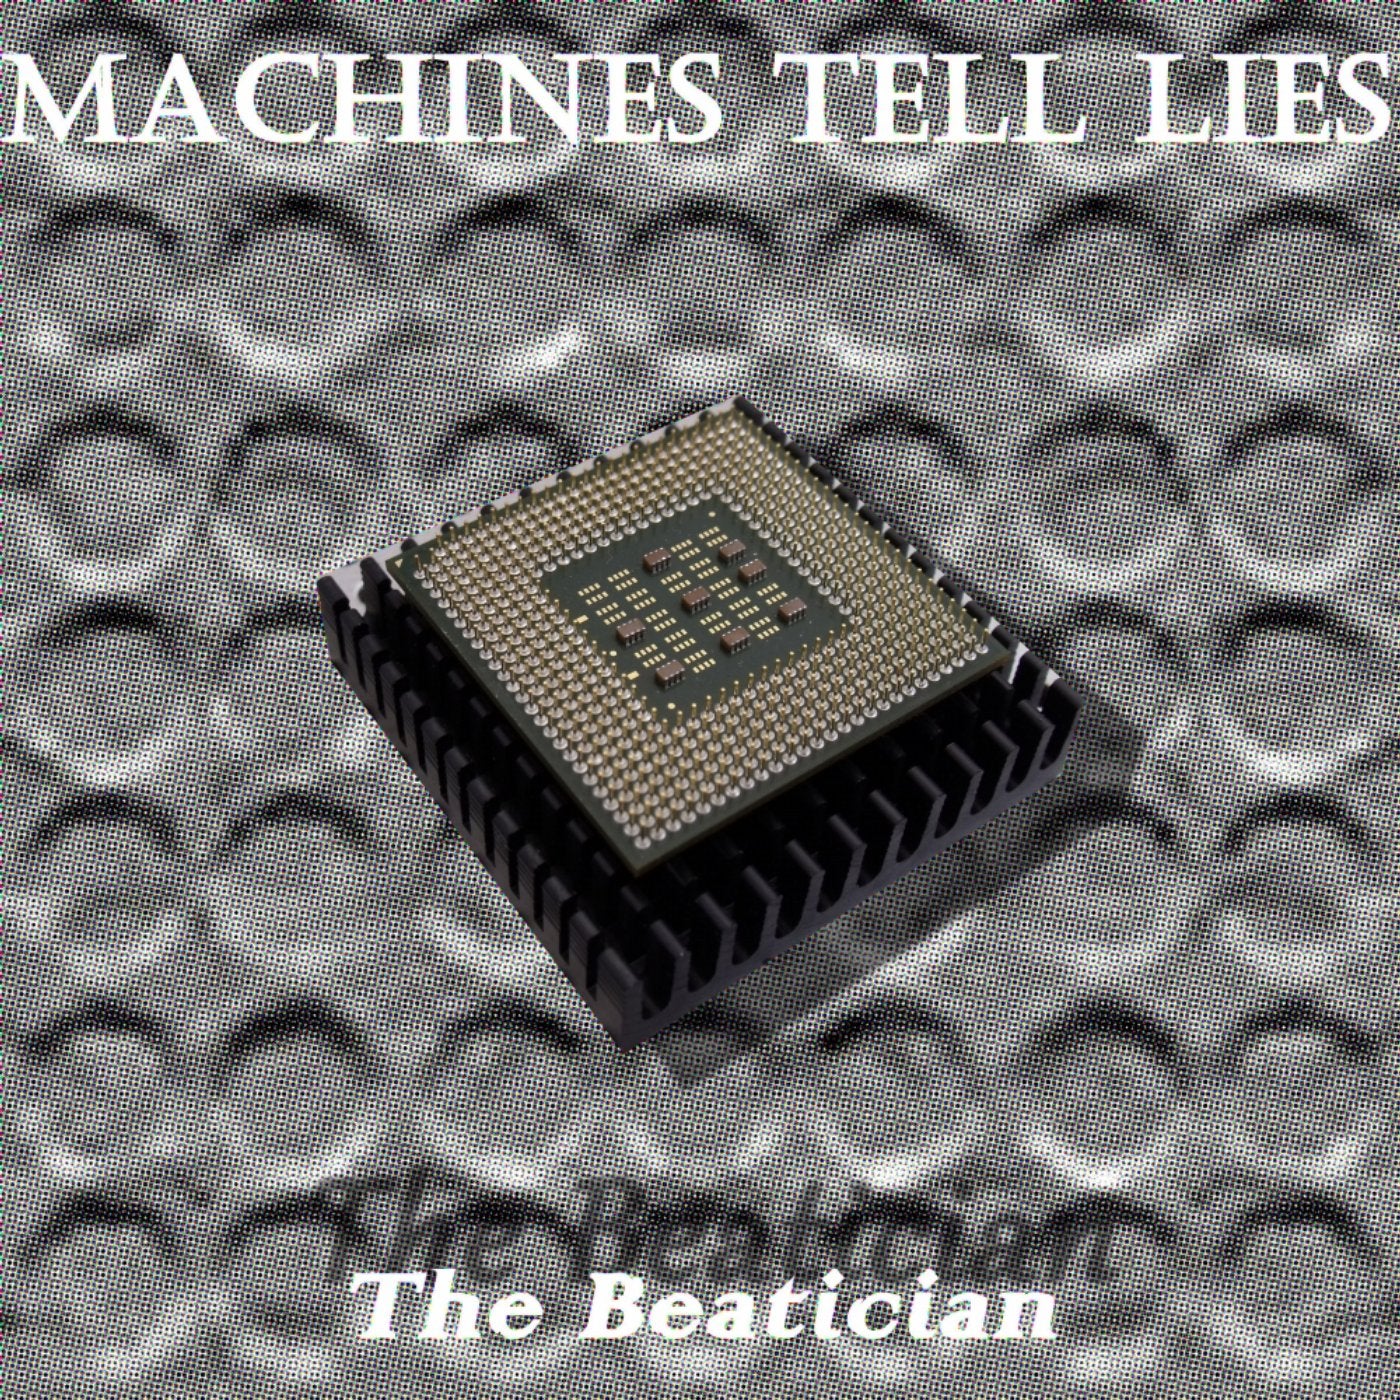 Machines Tell Lies